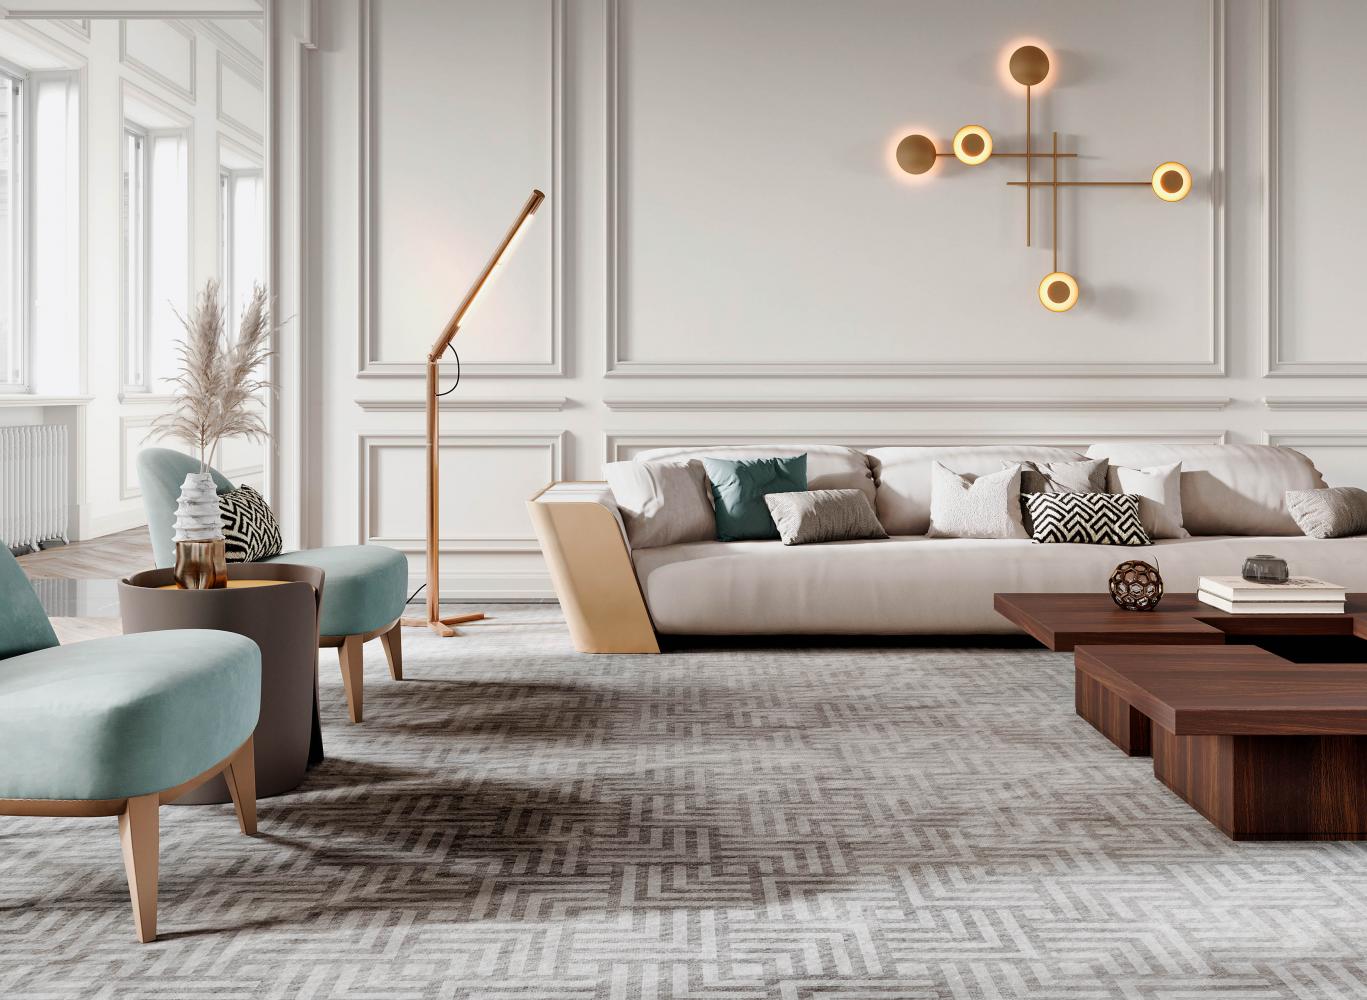 laurameroni furniture and lighting in a modern livingroom aesthetic